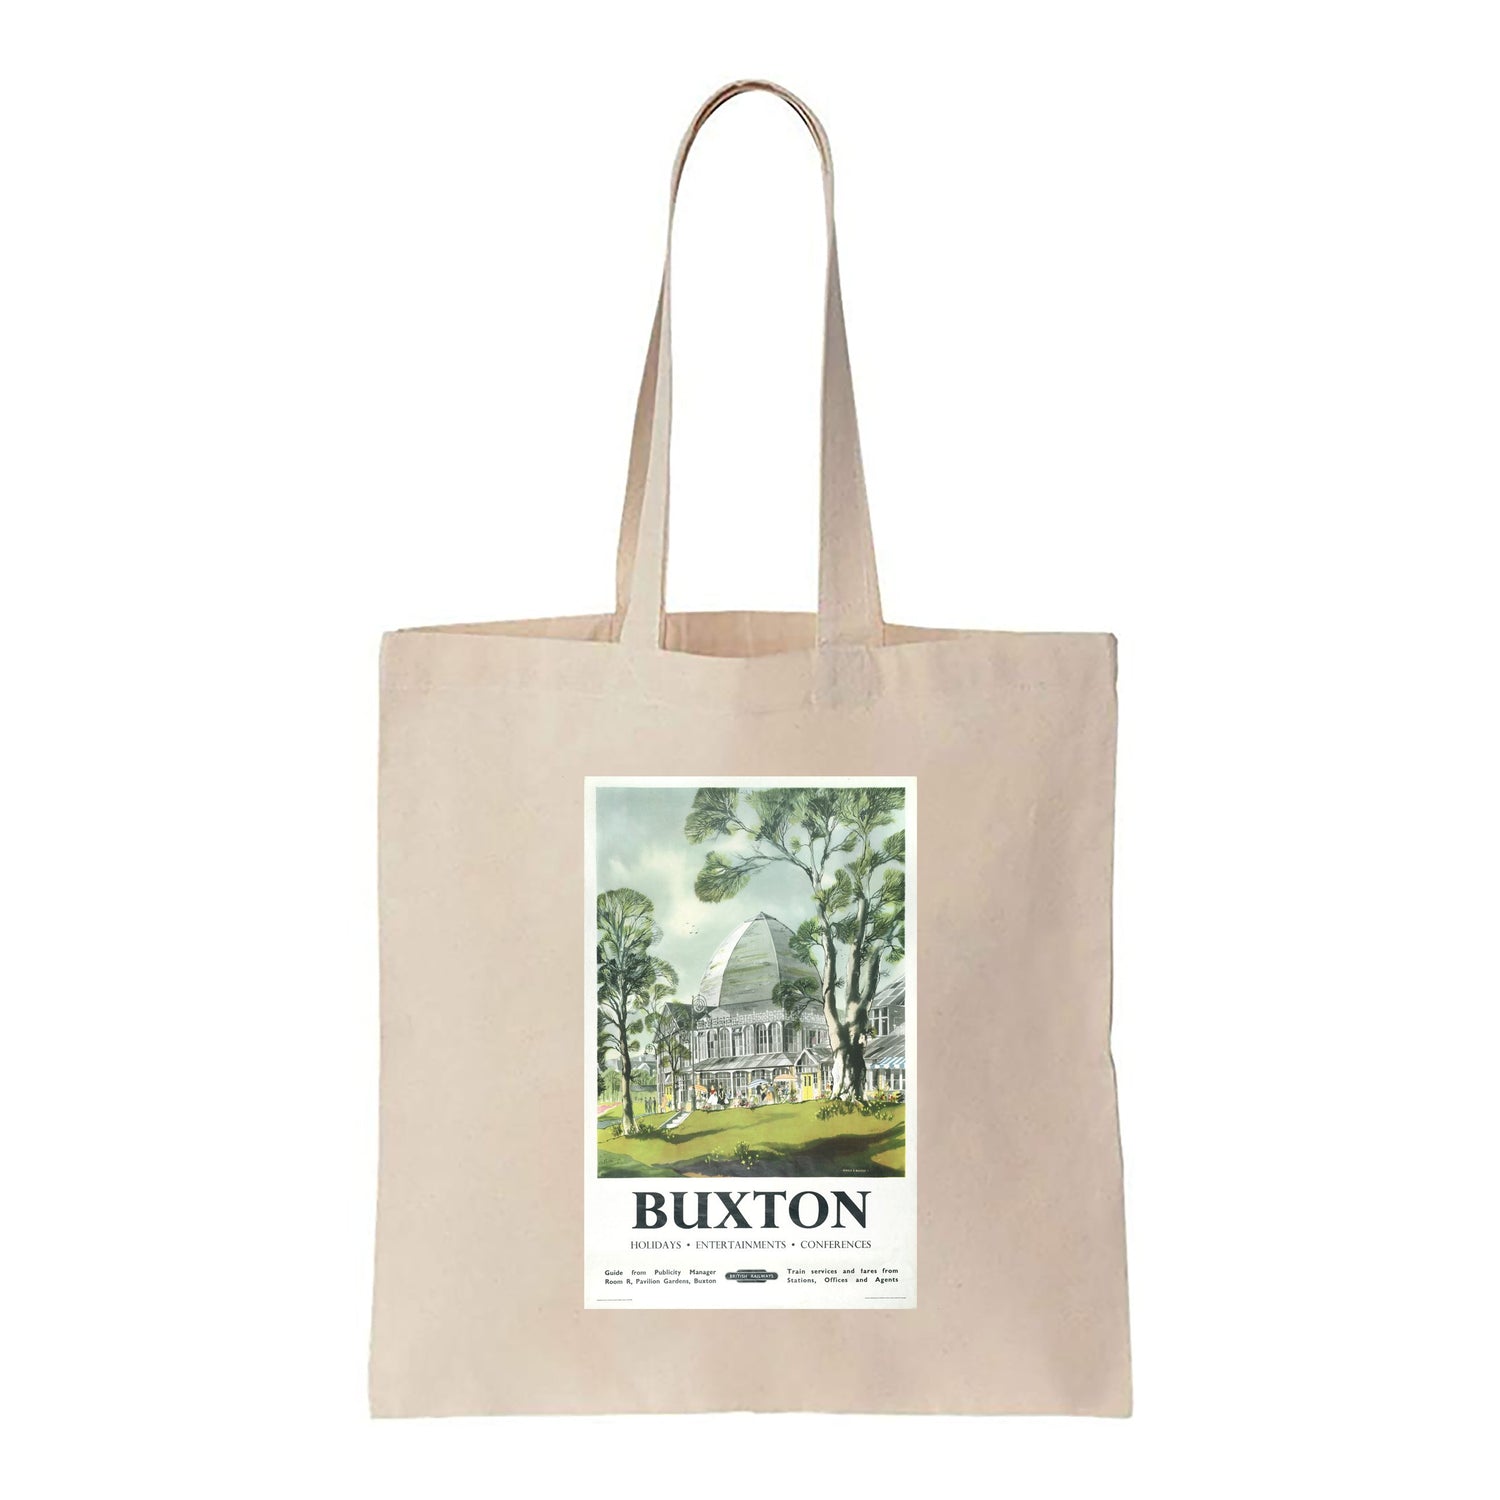 Buxton - Holidays, Entertainments, Conferences - Canvas Tote Bag